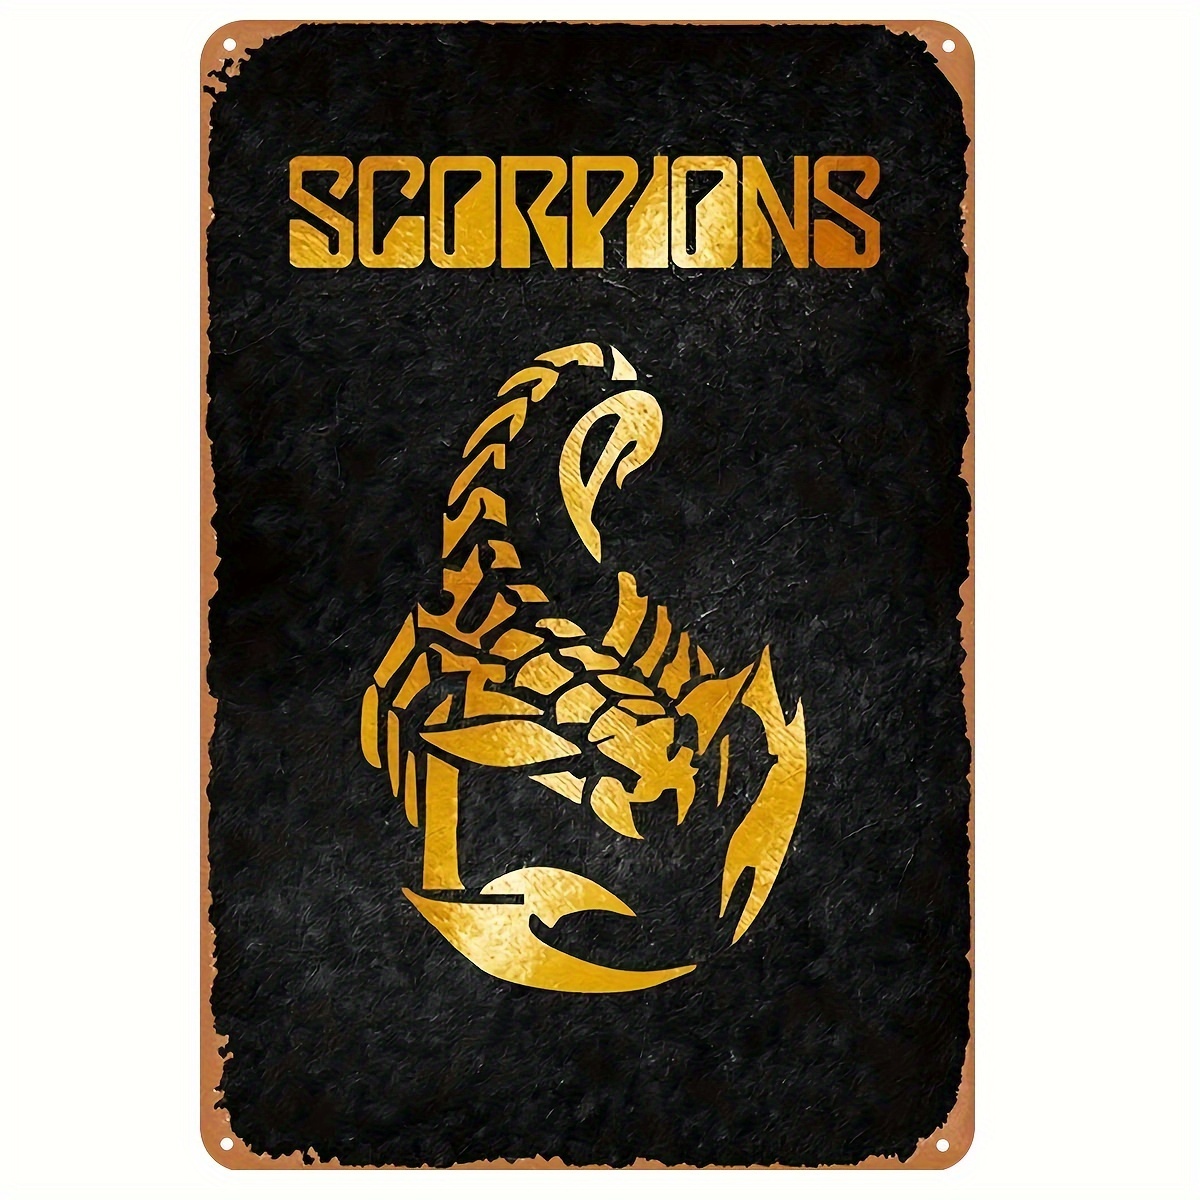 

Scorpions Metal Tin Sign (8''x12'') - Vintage Iron Wall Art For University, Bathroom, Bar, Cafe, Garage, Garden, Farmhouse - Weather Resistant Decor For Man Cave -1 Pc Black